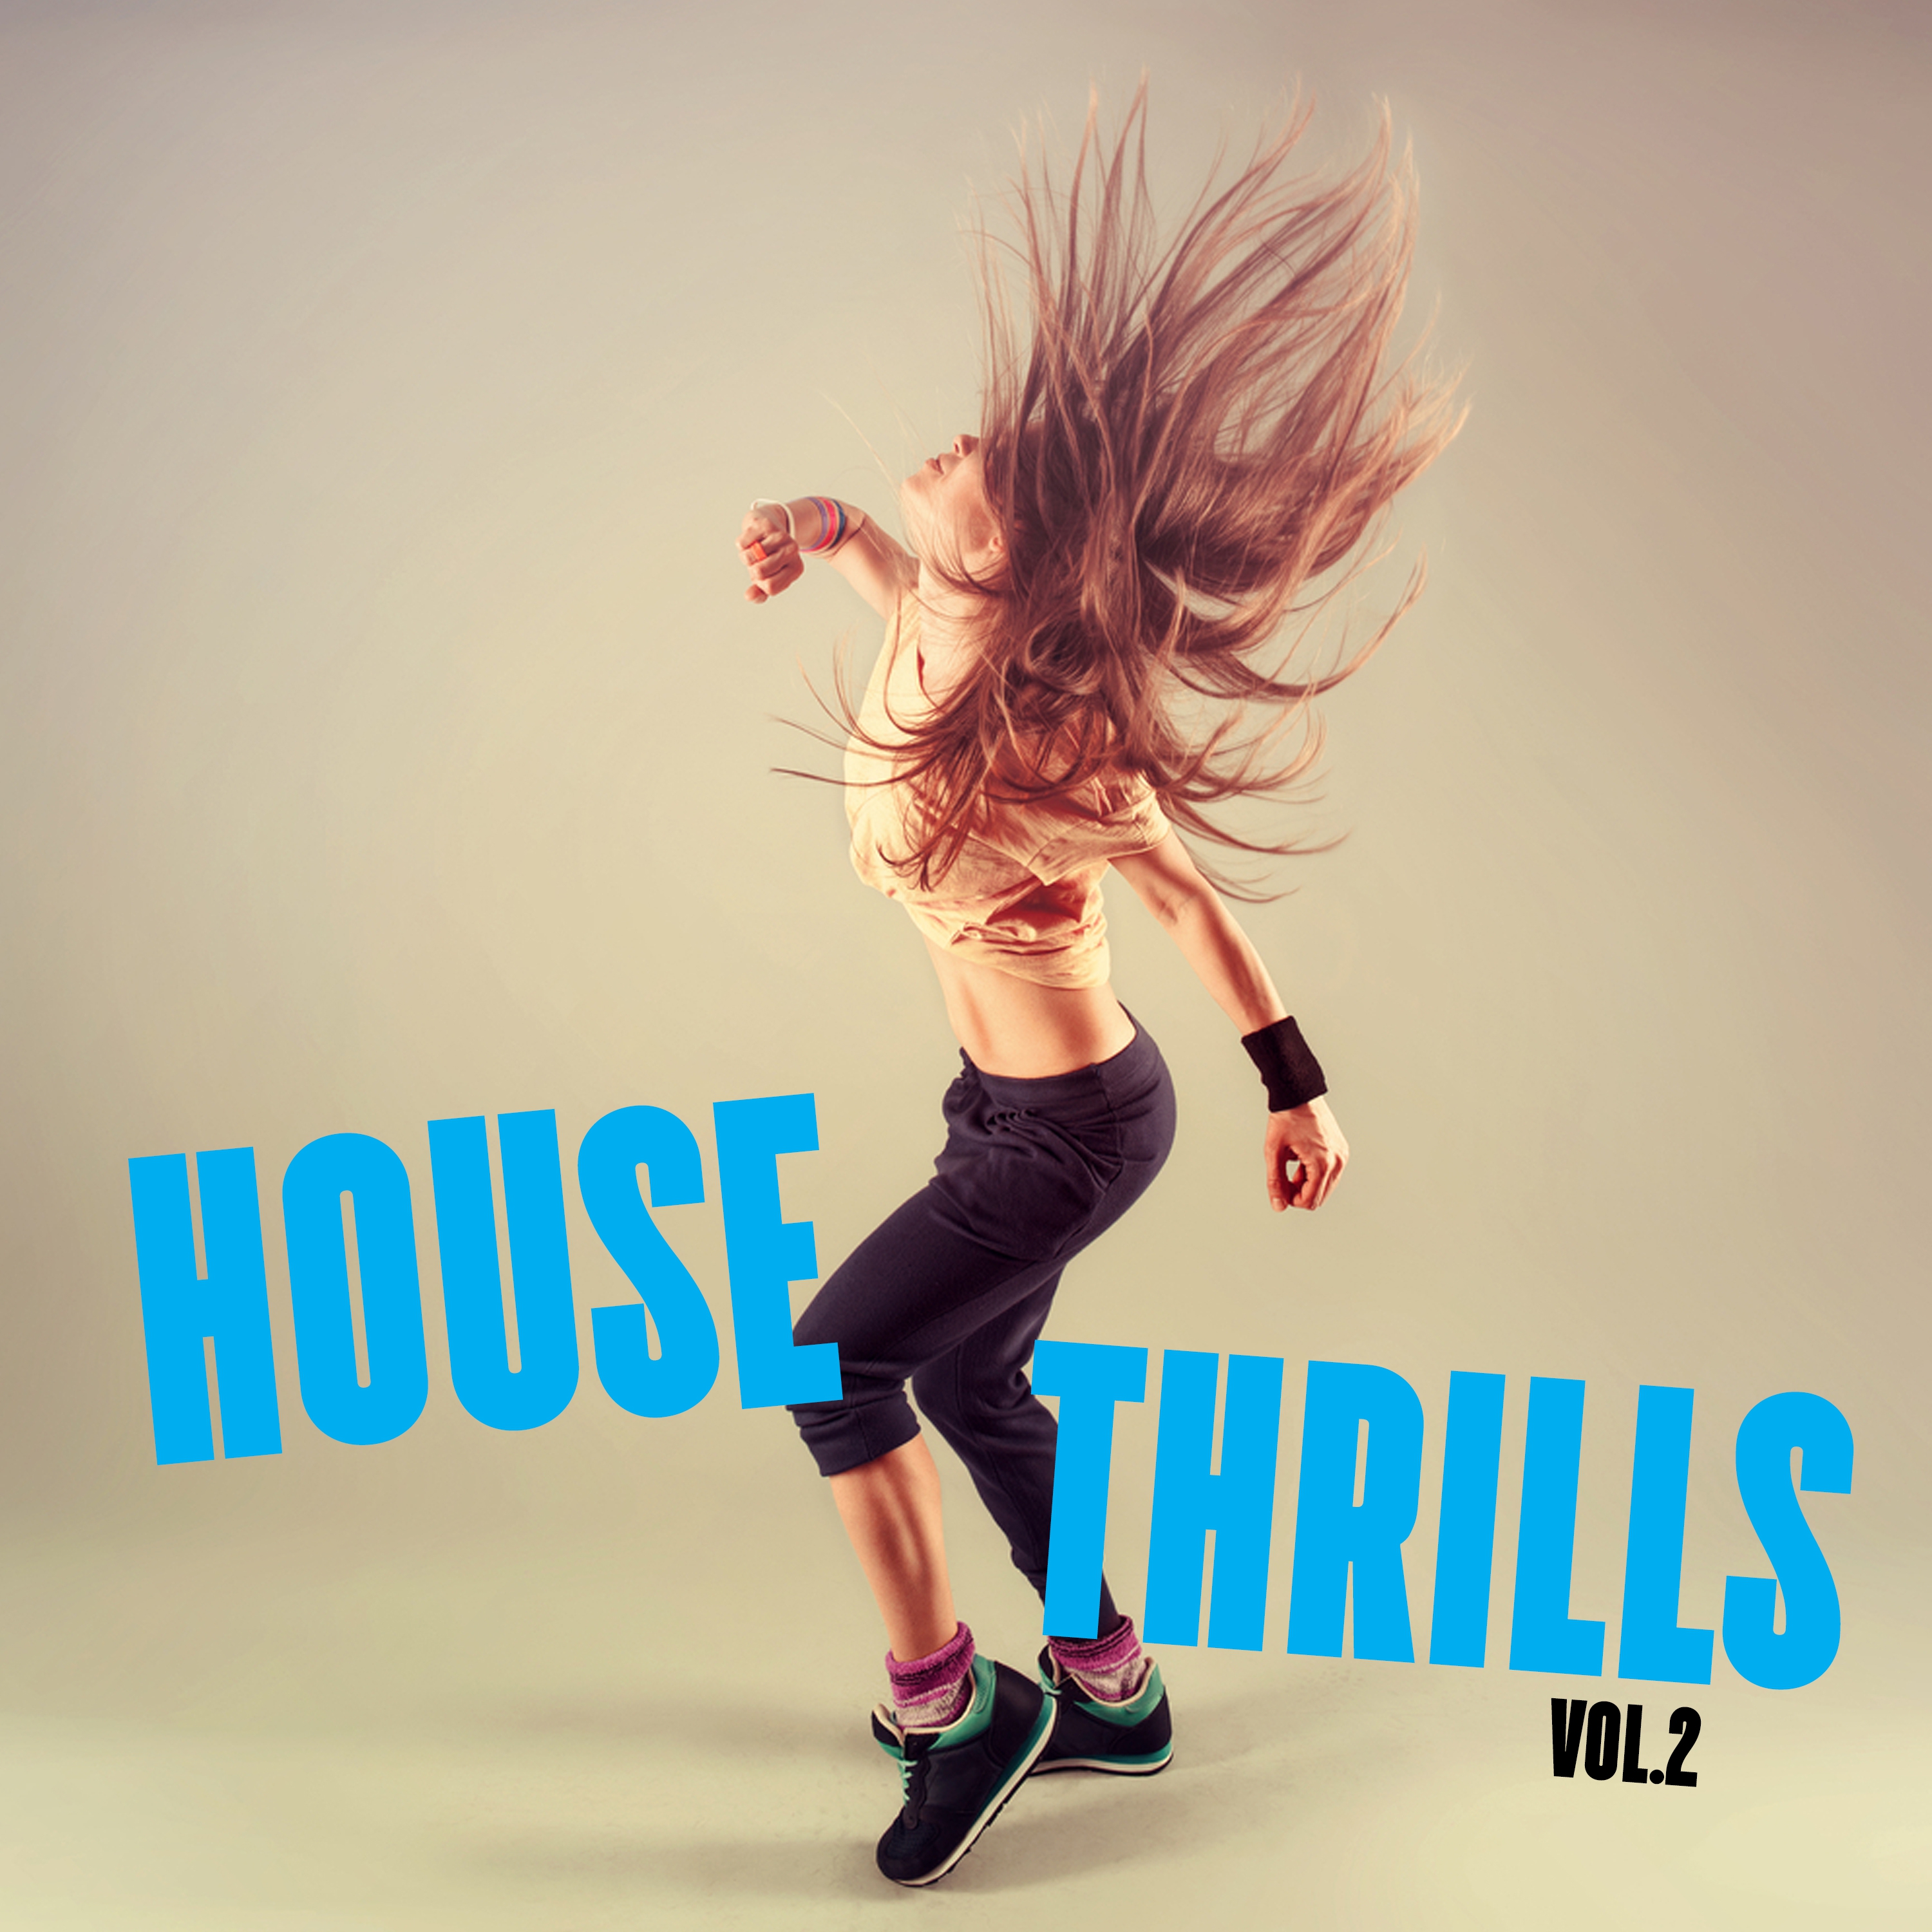 House Thrills, Vol. 2